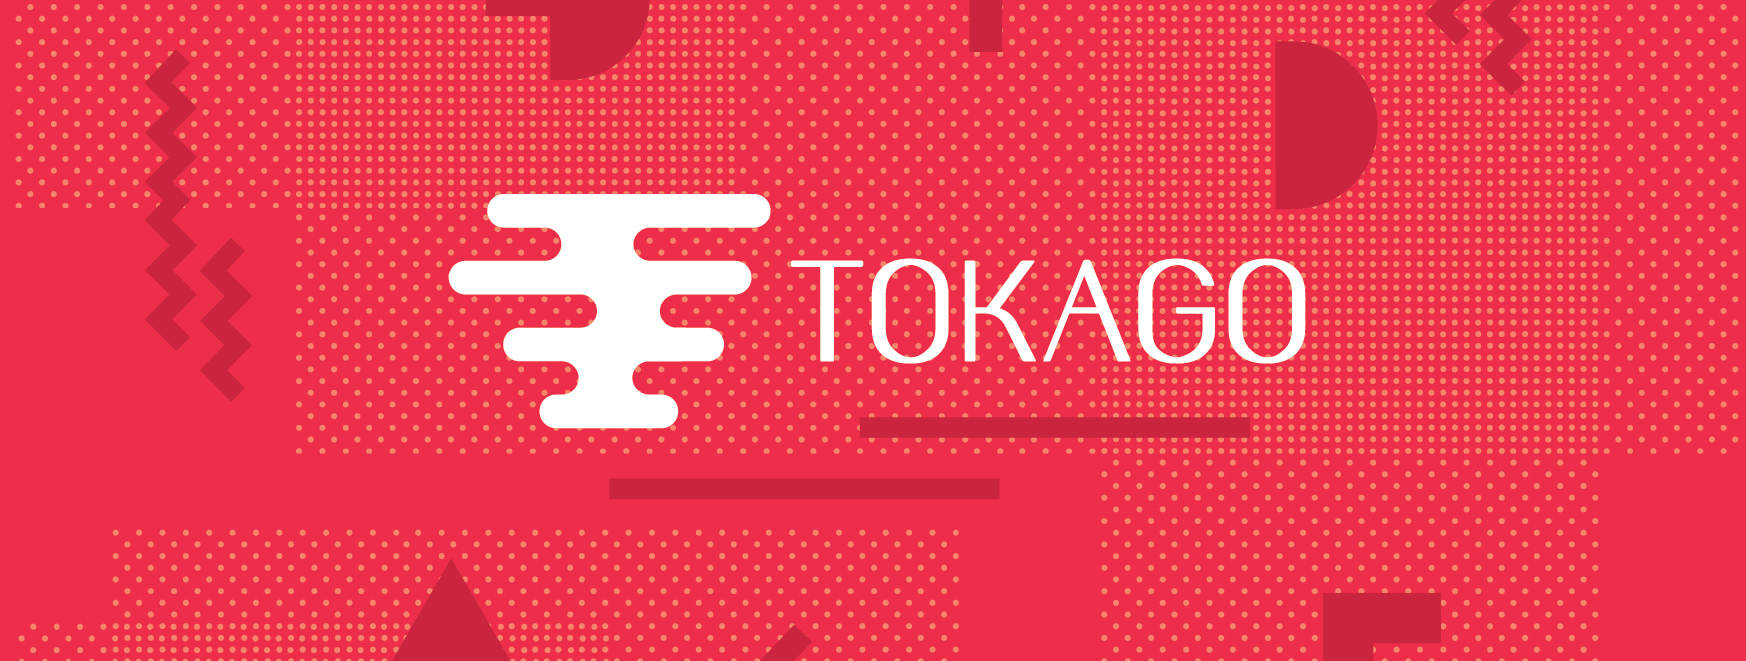 TOKAGO.vn - We just start something new!